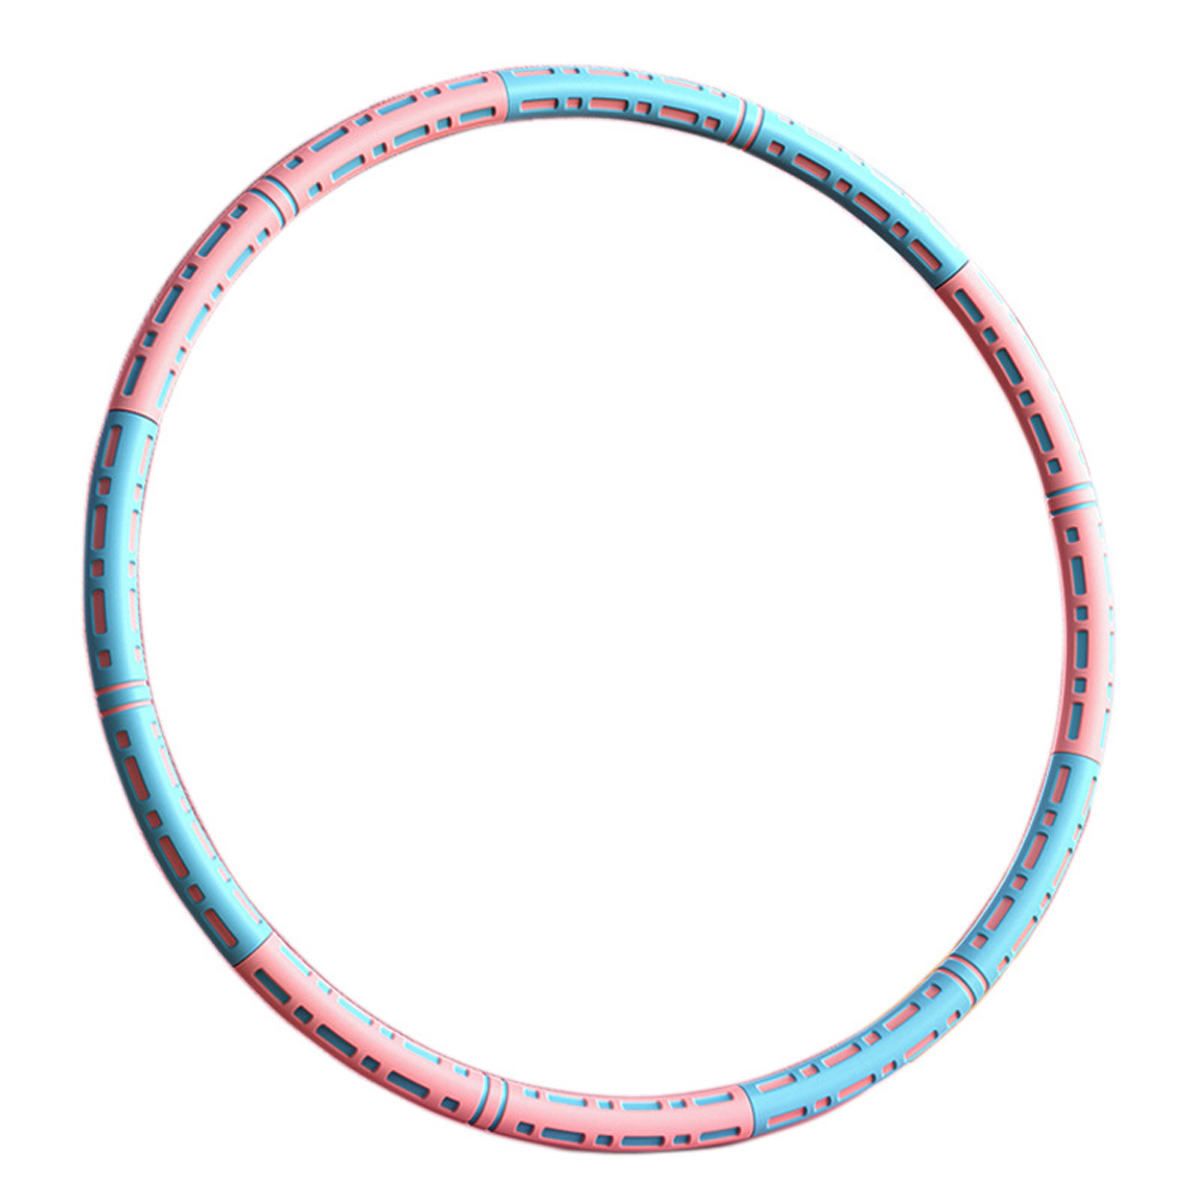 LEIGO Hula-Hoop-Reifen,6 für Blau-Pink Schnitte,Abnehmbar,Fitness-Reifen,Hula Hoop anspruch Hula-Hoop-Reifen, jeden